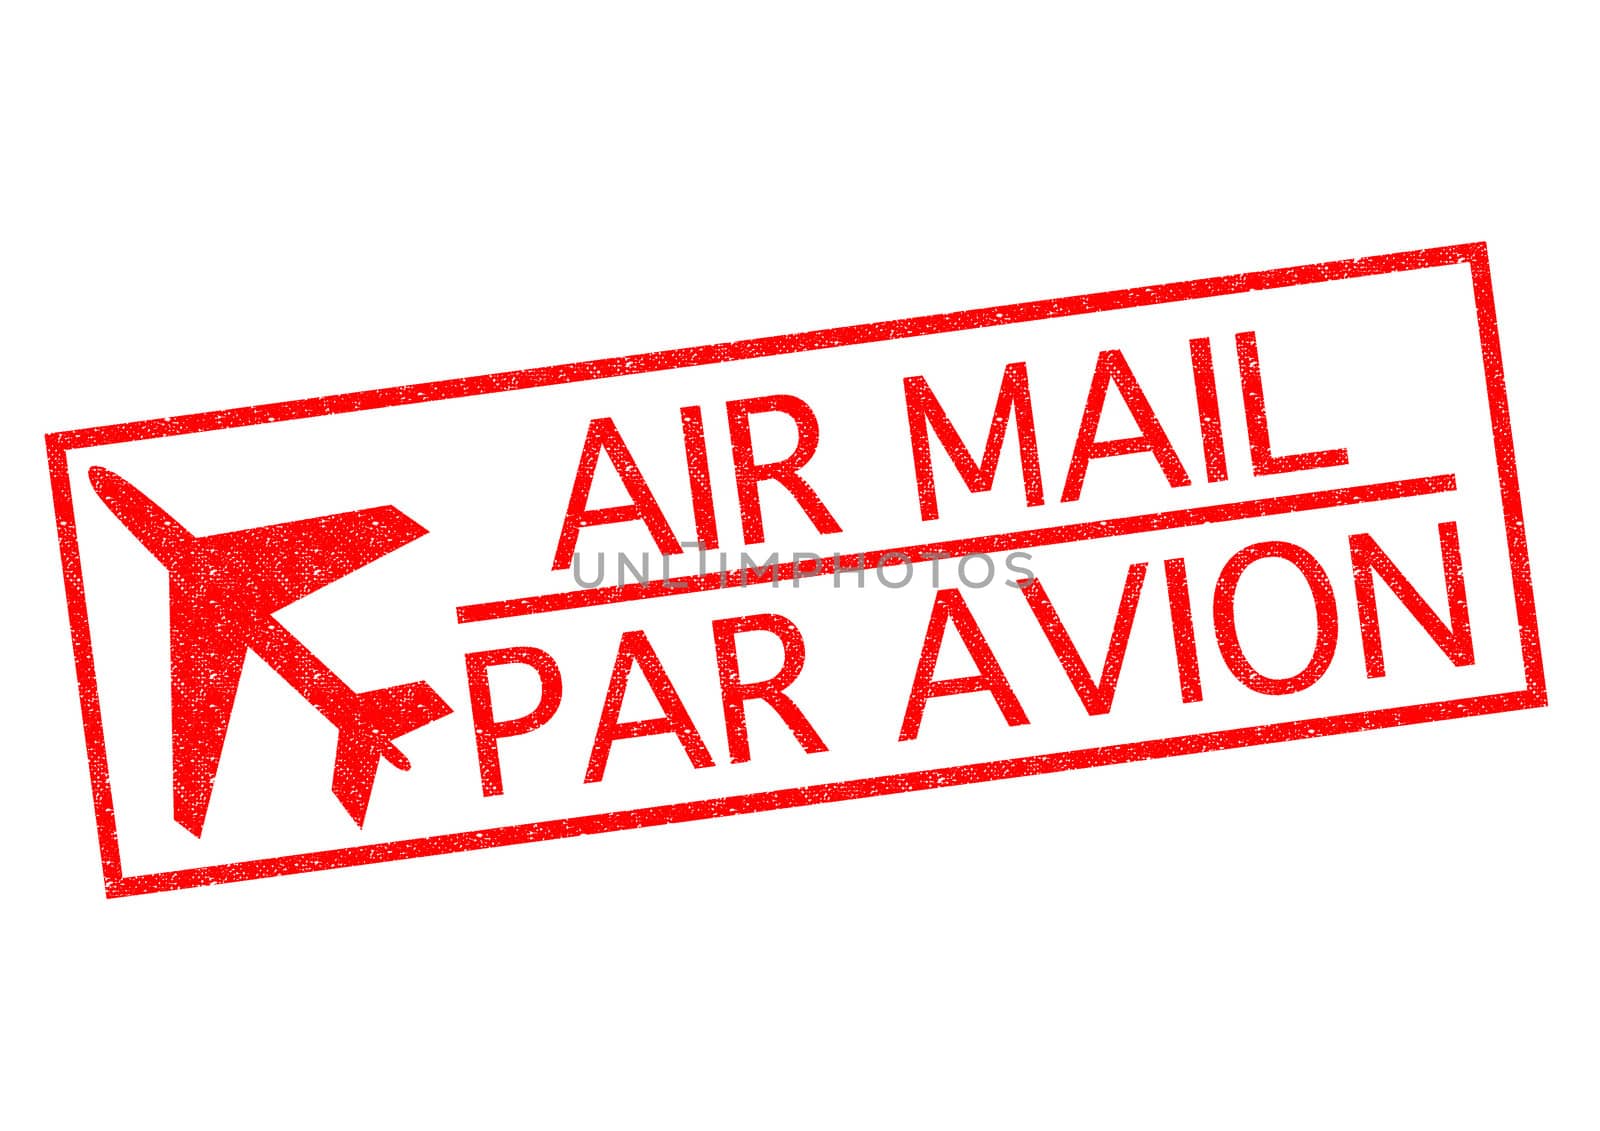 AIR MAIL/PAR AVION by chrisdorney